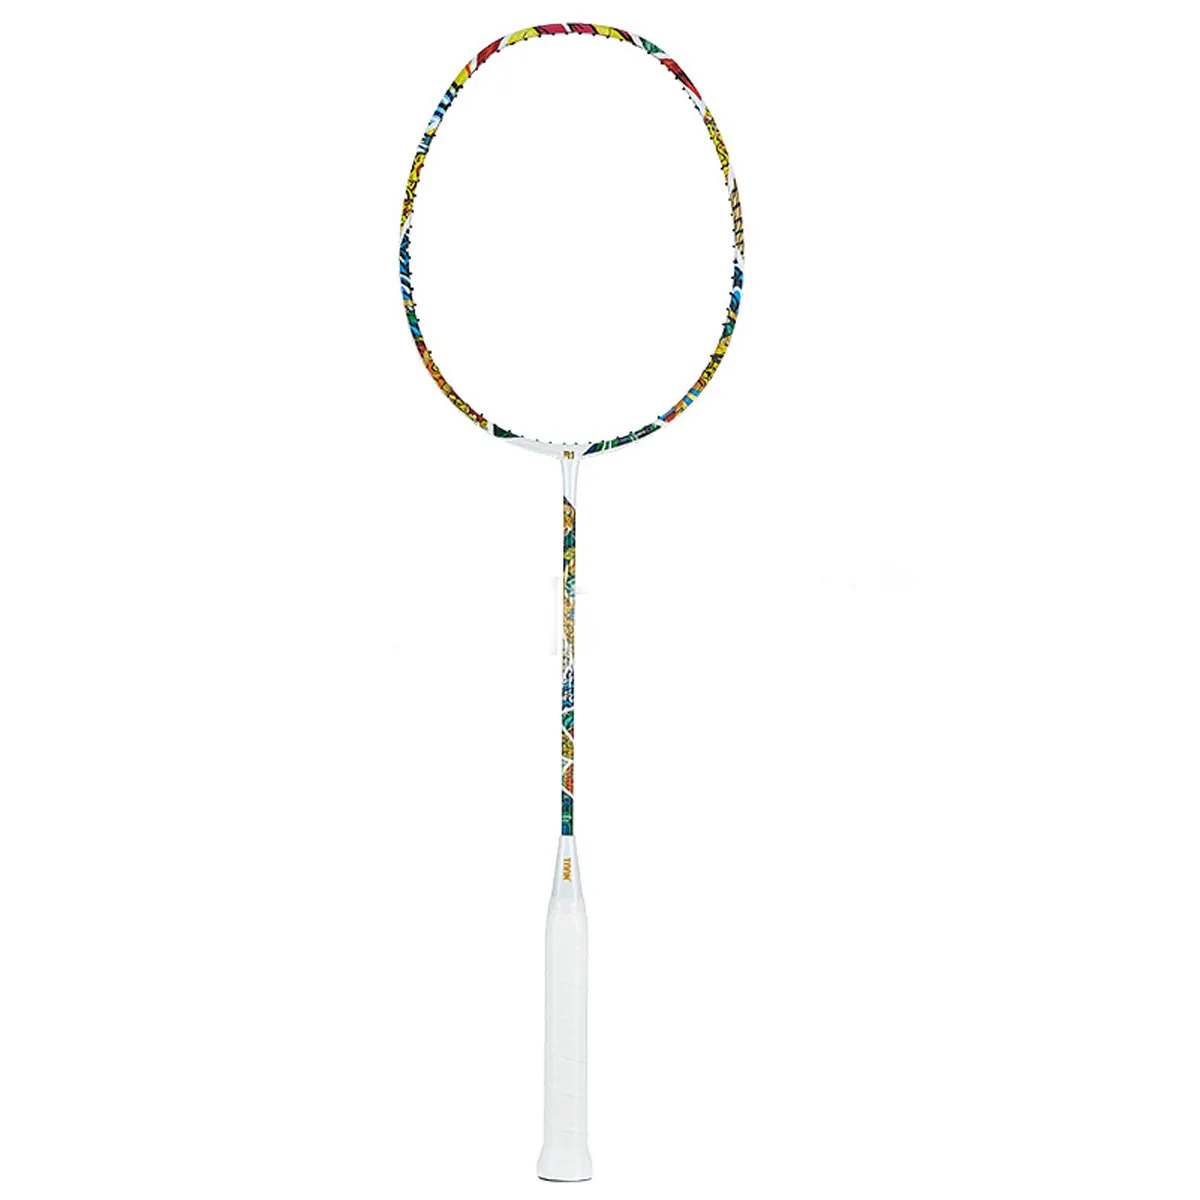 Raquete de badminton taan Raquete de treinamento totalmente em fibra de carbono ultraleve